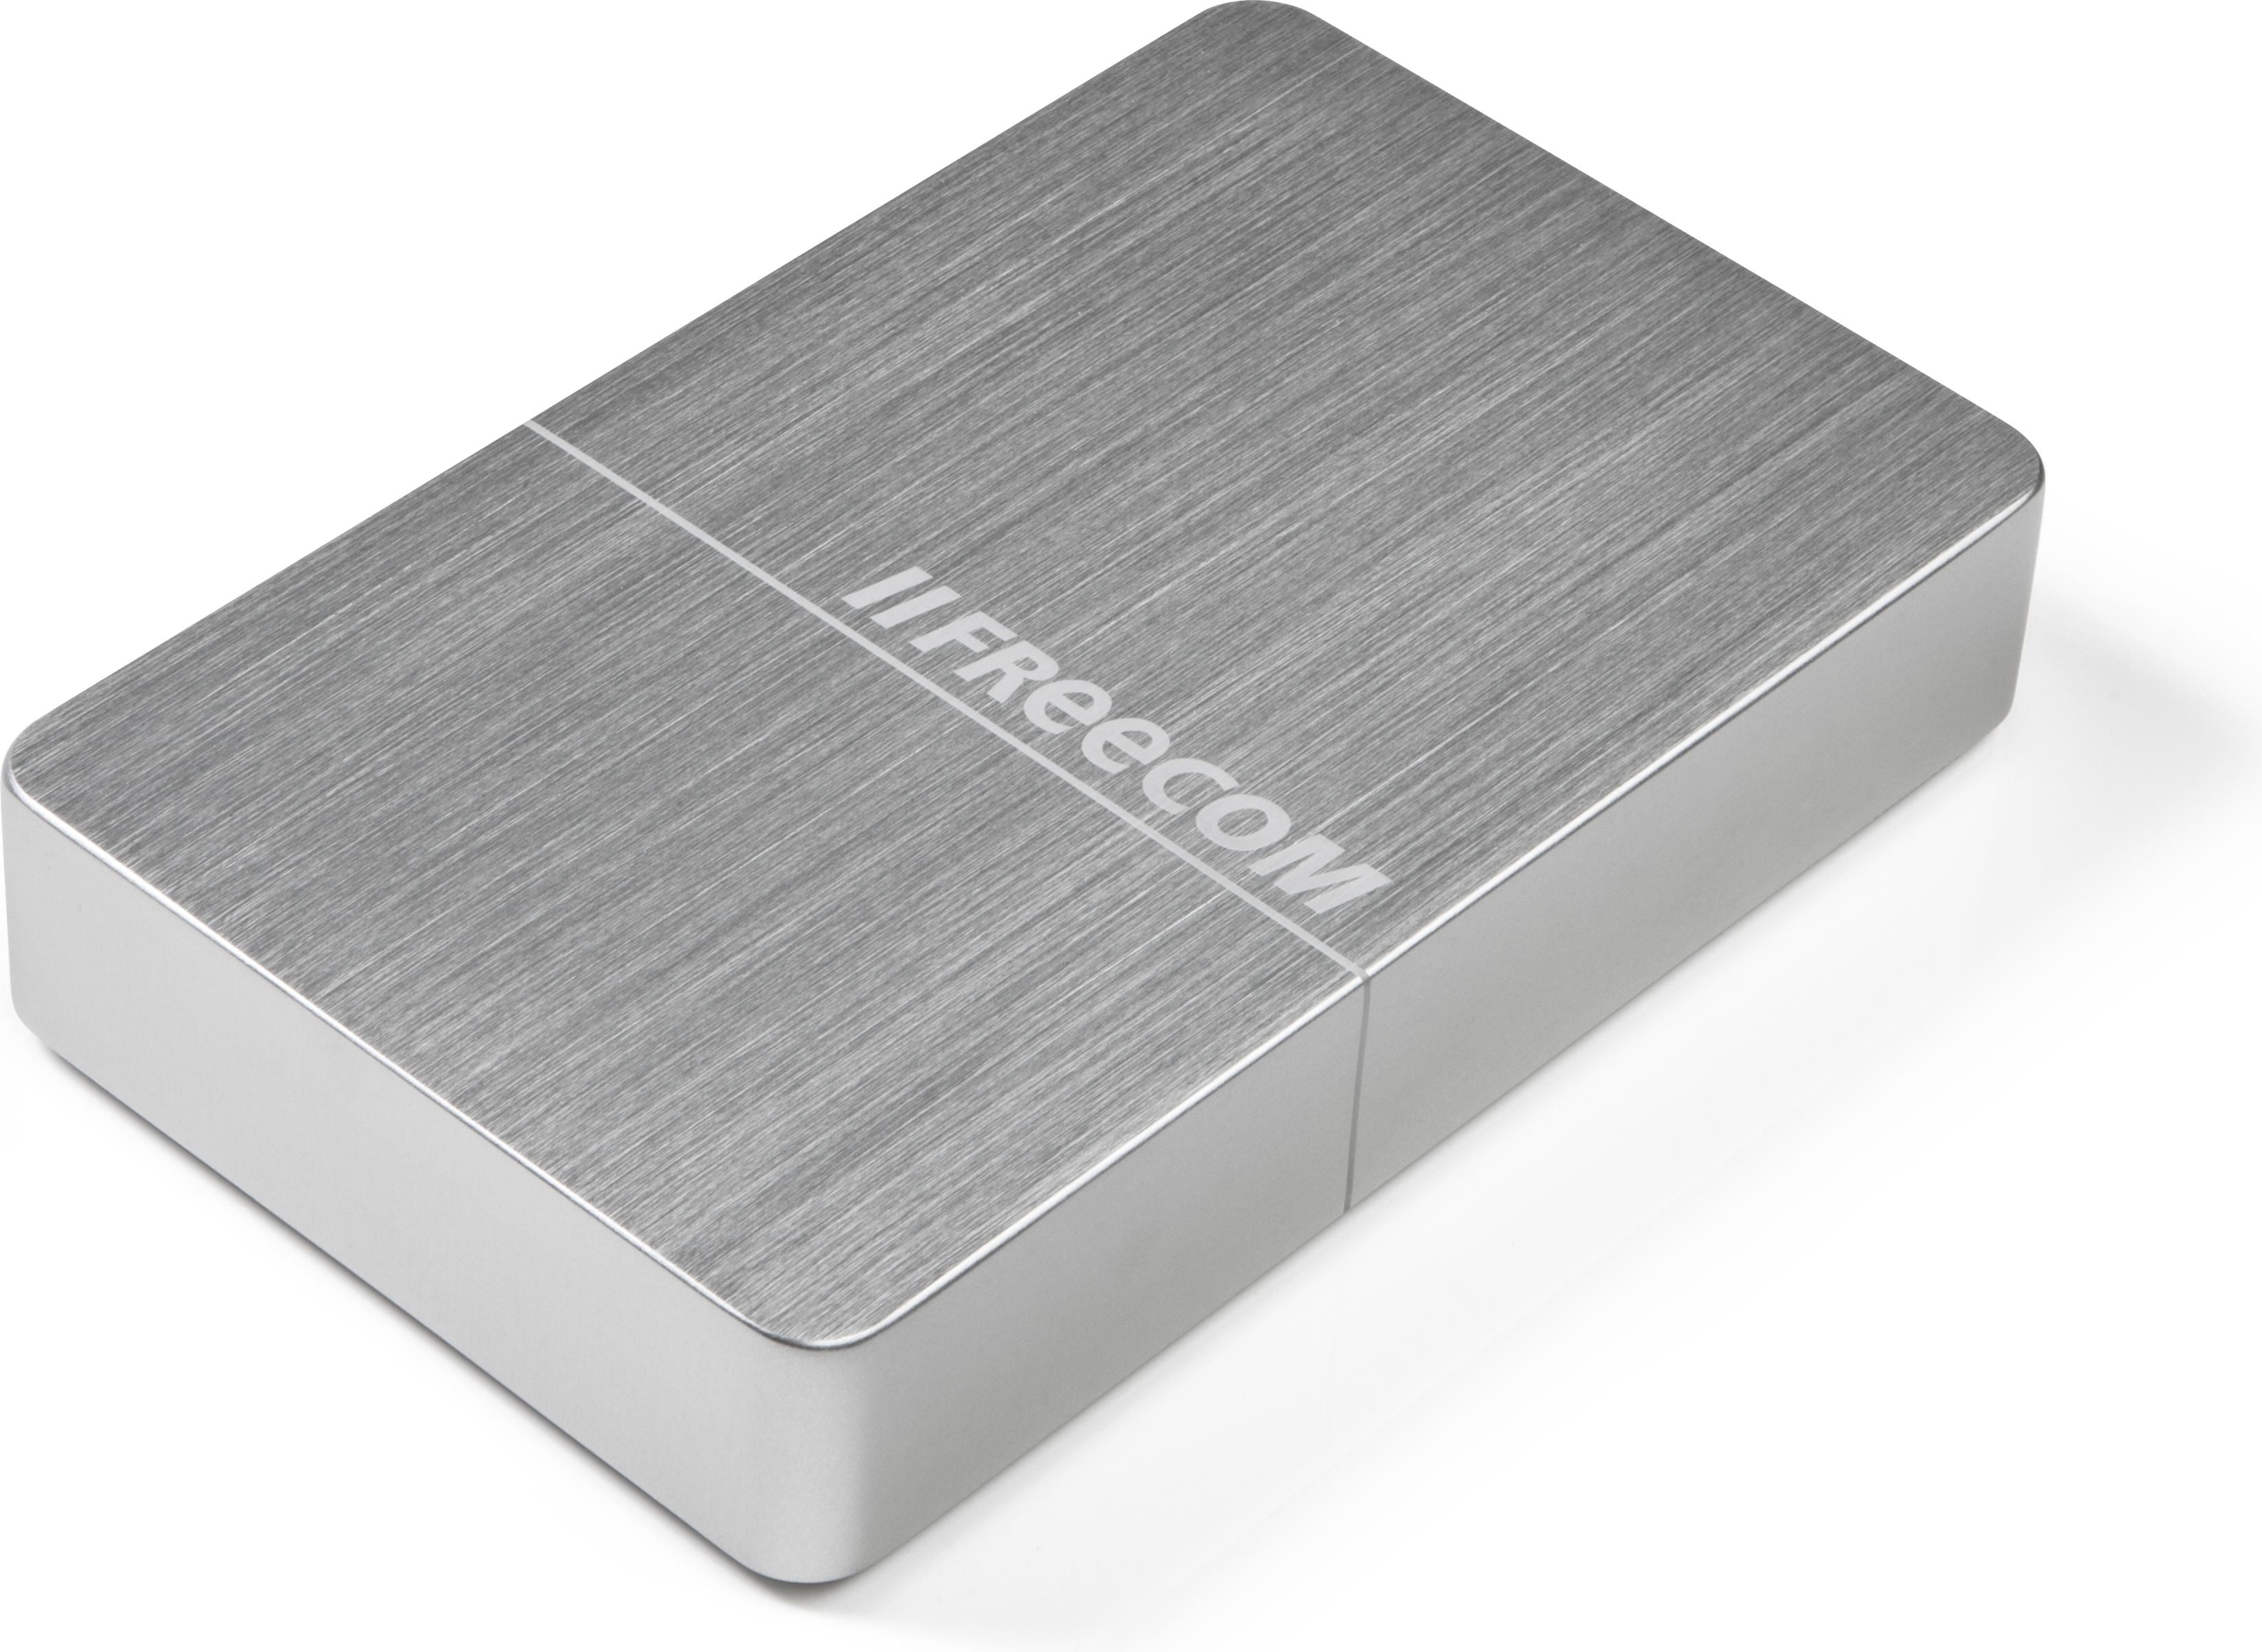 Freecom mHDD Desktop Drive - 4TB Silver (4 TB), Externe Festplatte, Silber